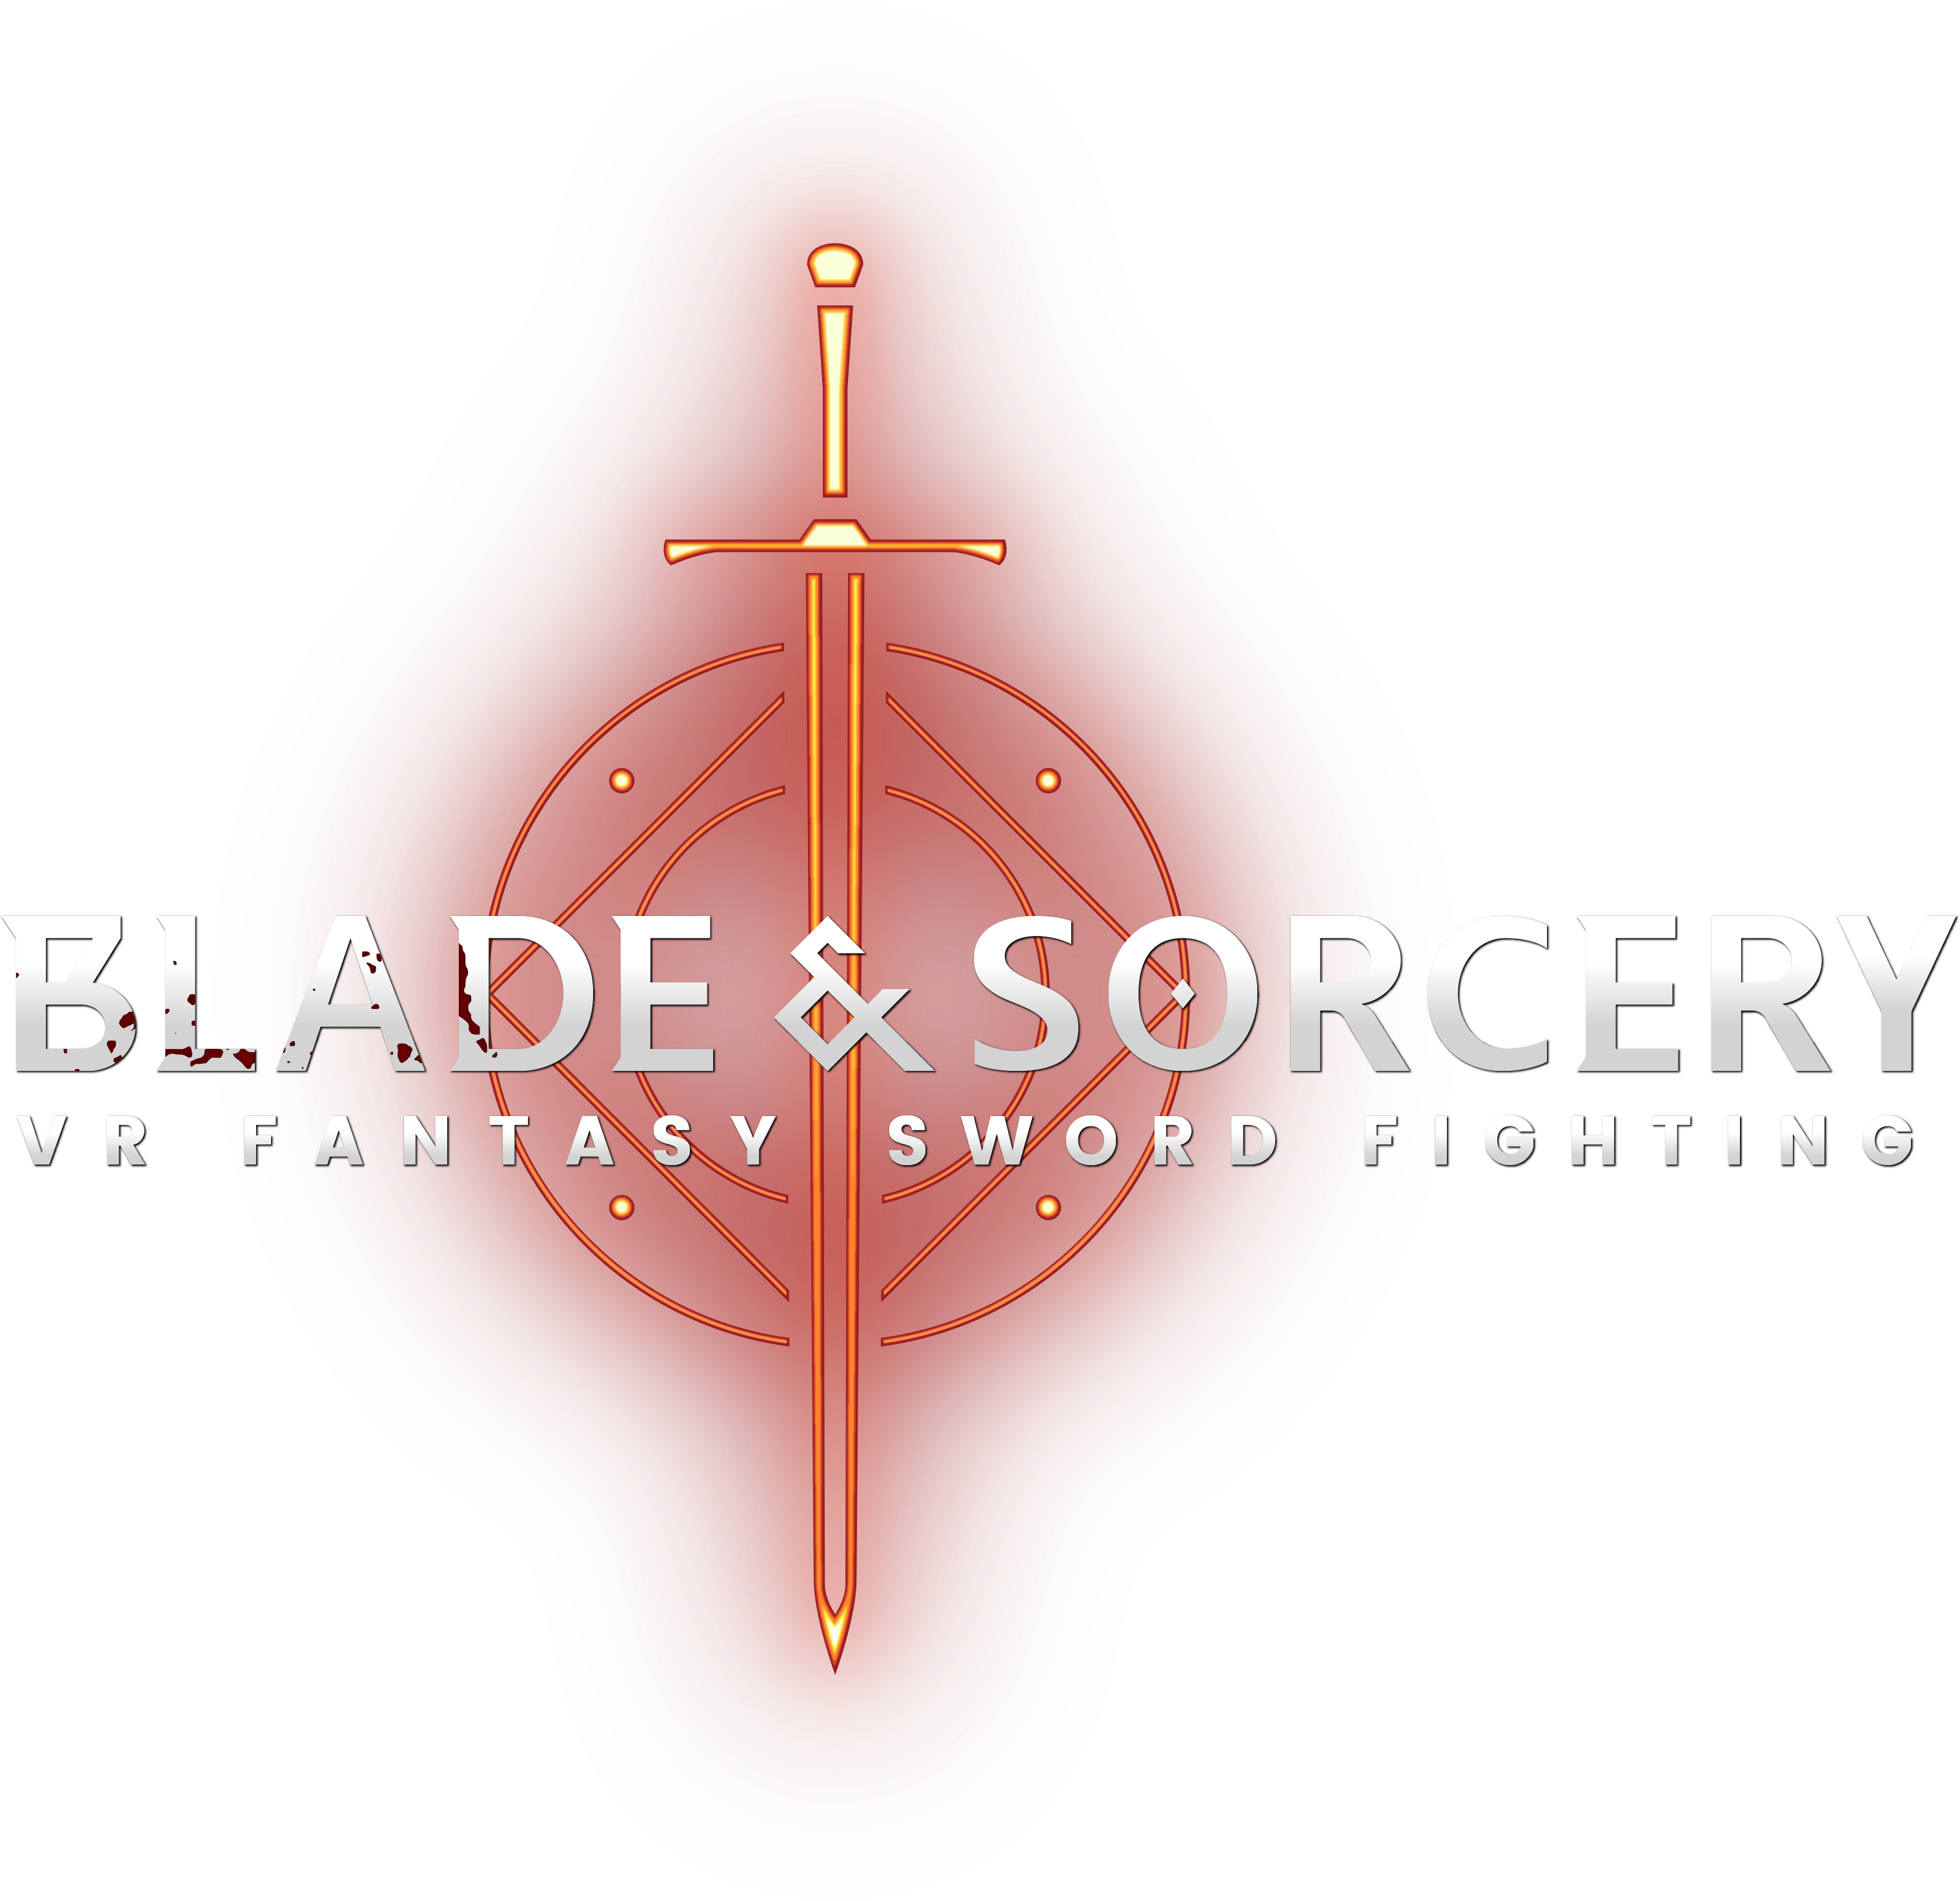 Blade and sorcery как установить моды steam фото 68